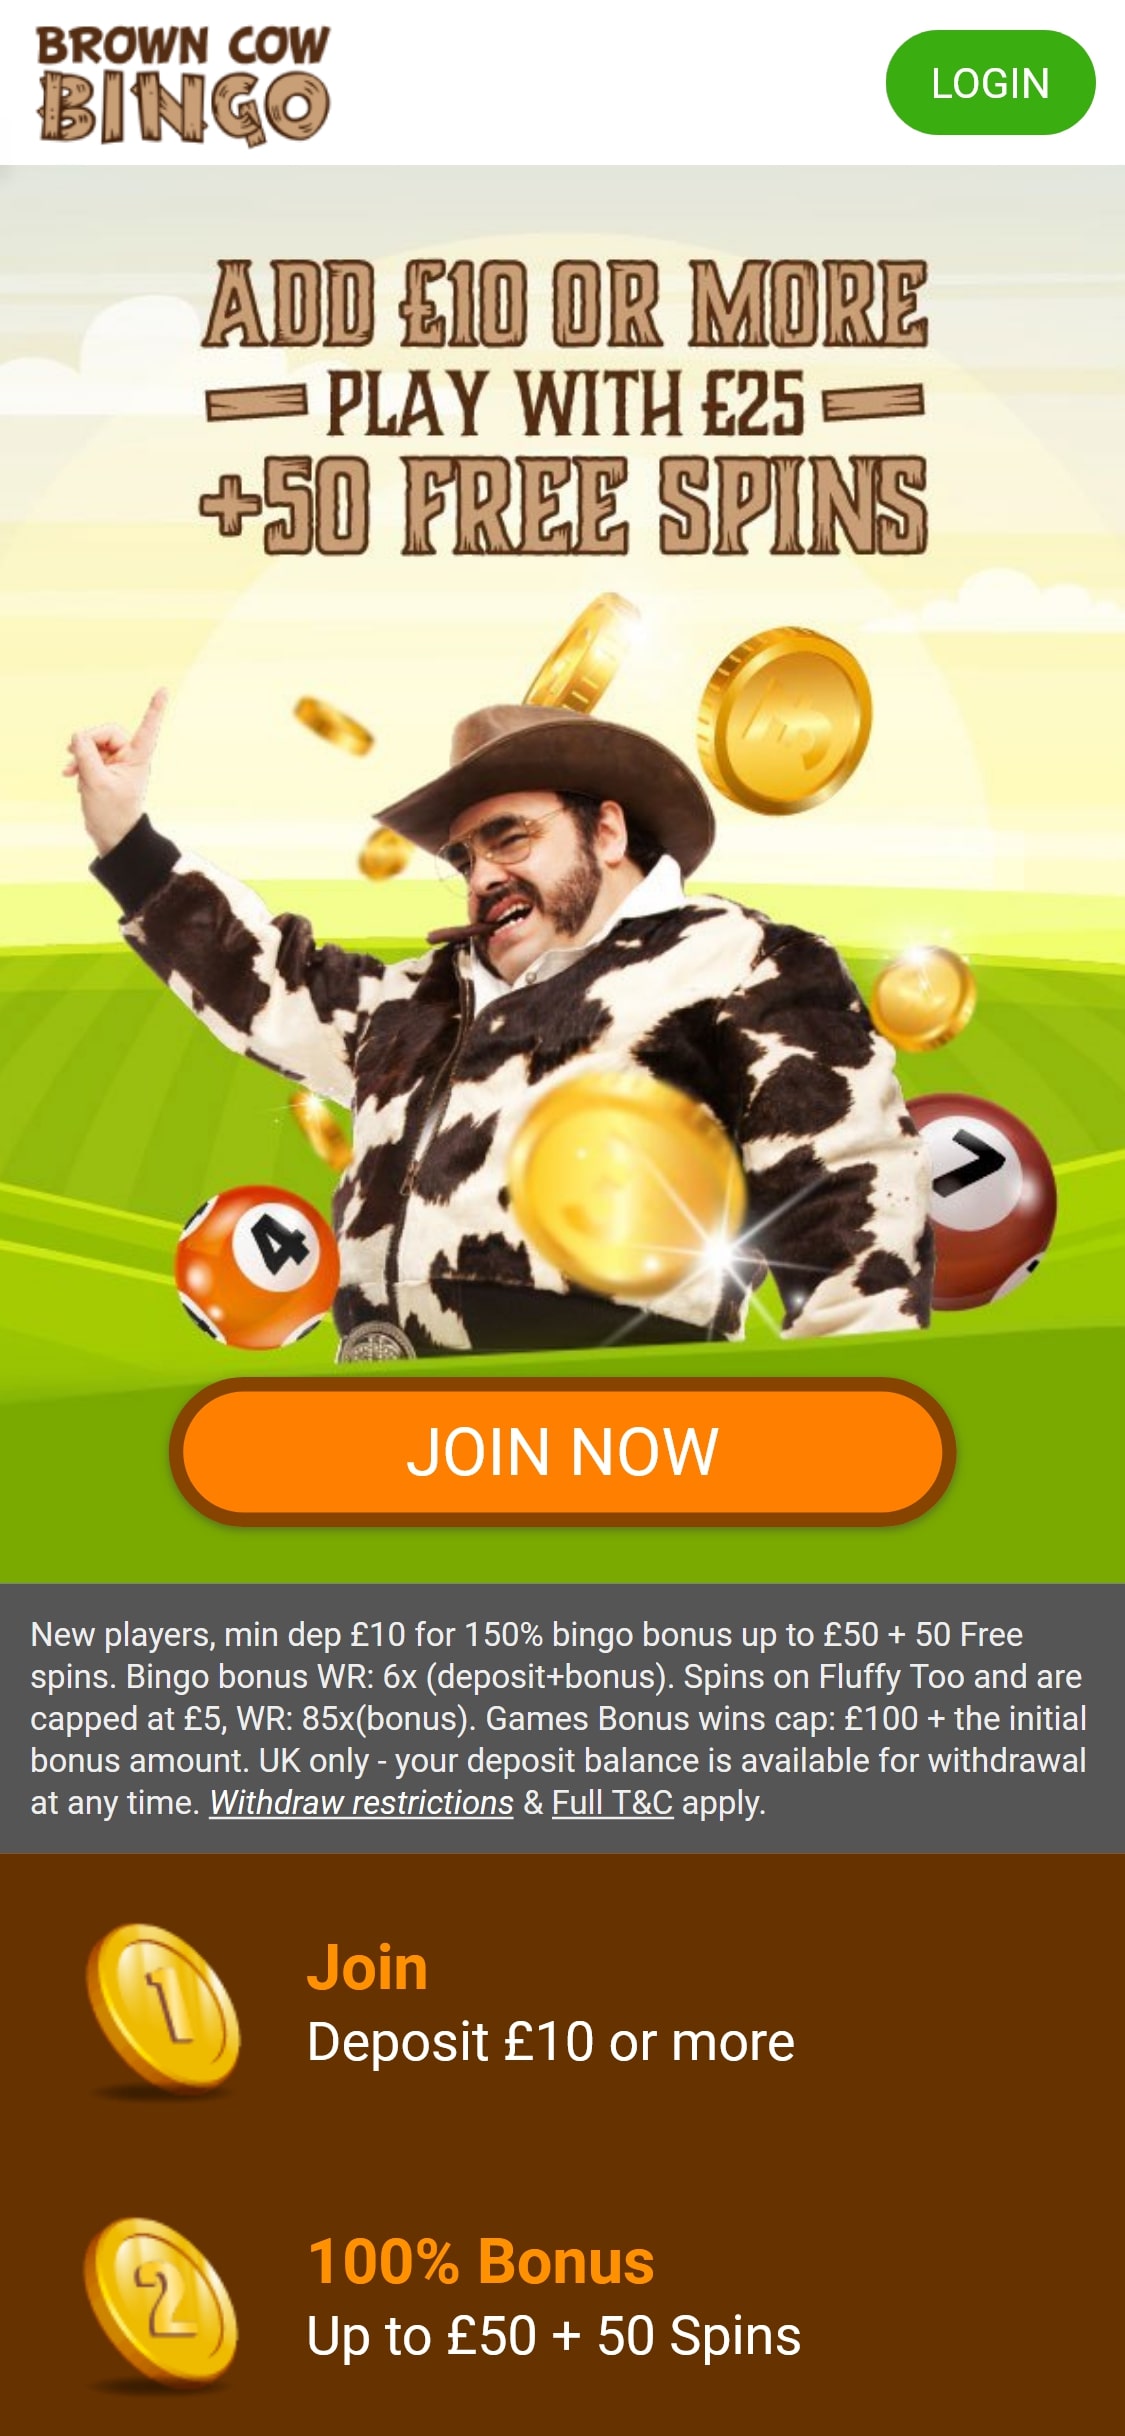 Brown Cow Bingo Casino Mobile Review